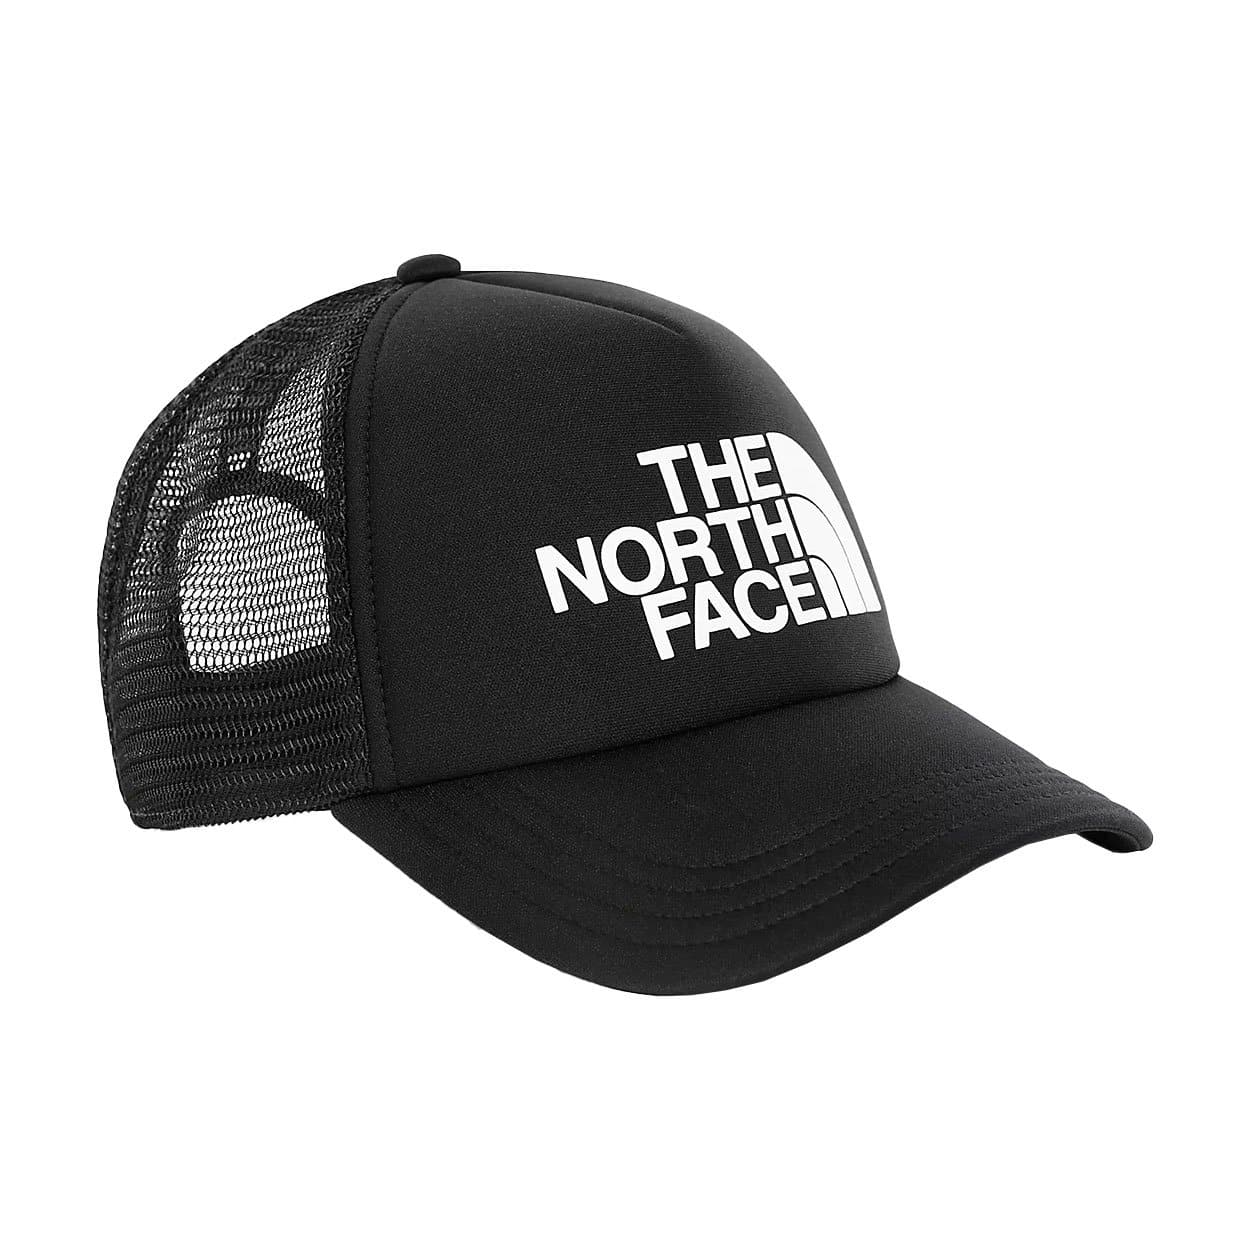 The North Face Logo Trucker Cap em TNF Black. Foto de 3/4 de frente.